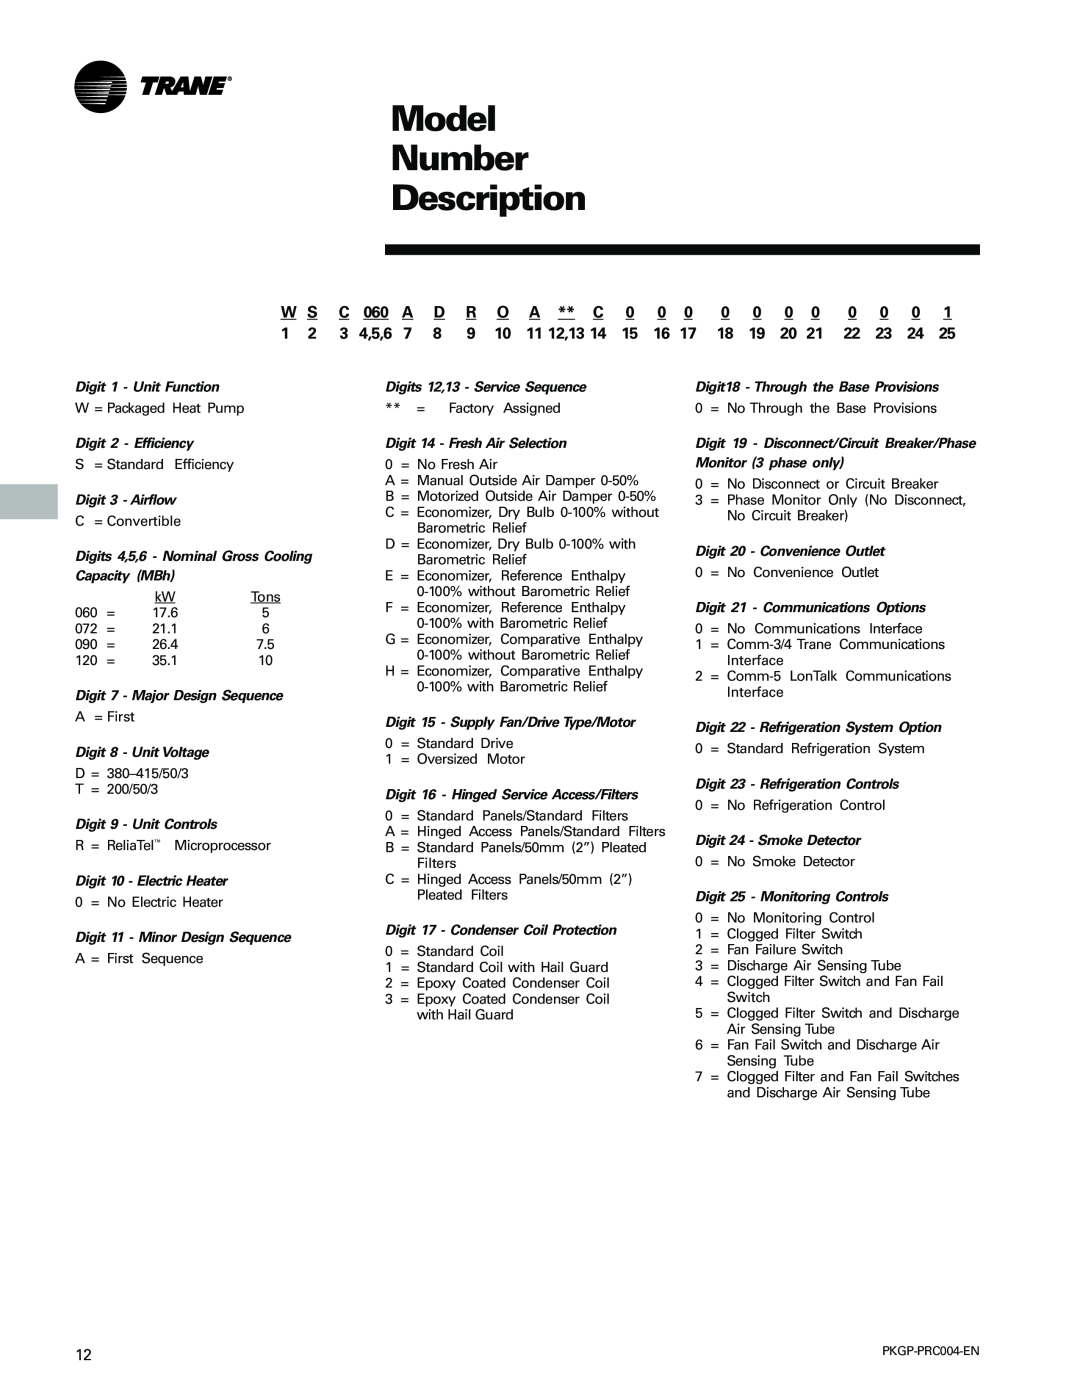 Trane WSC060-120 manual Model Number Description 